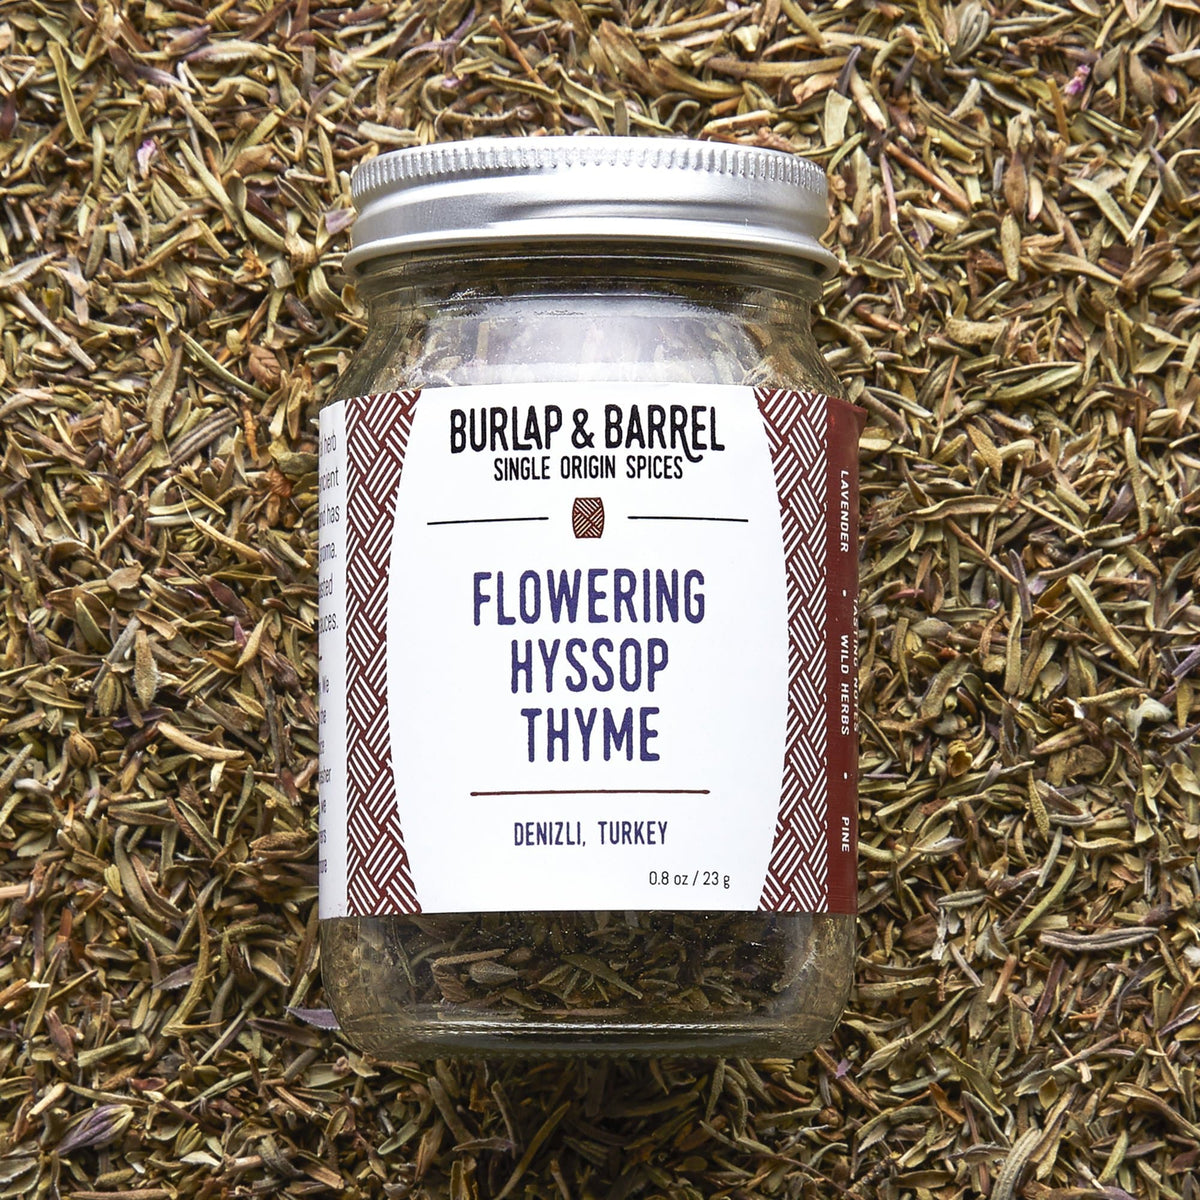 Flowering Hyssop Thyme - Burlap & Barrel Single Origin Spices